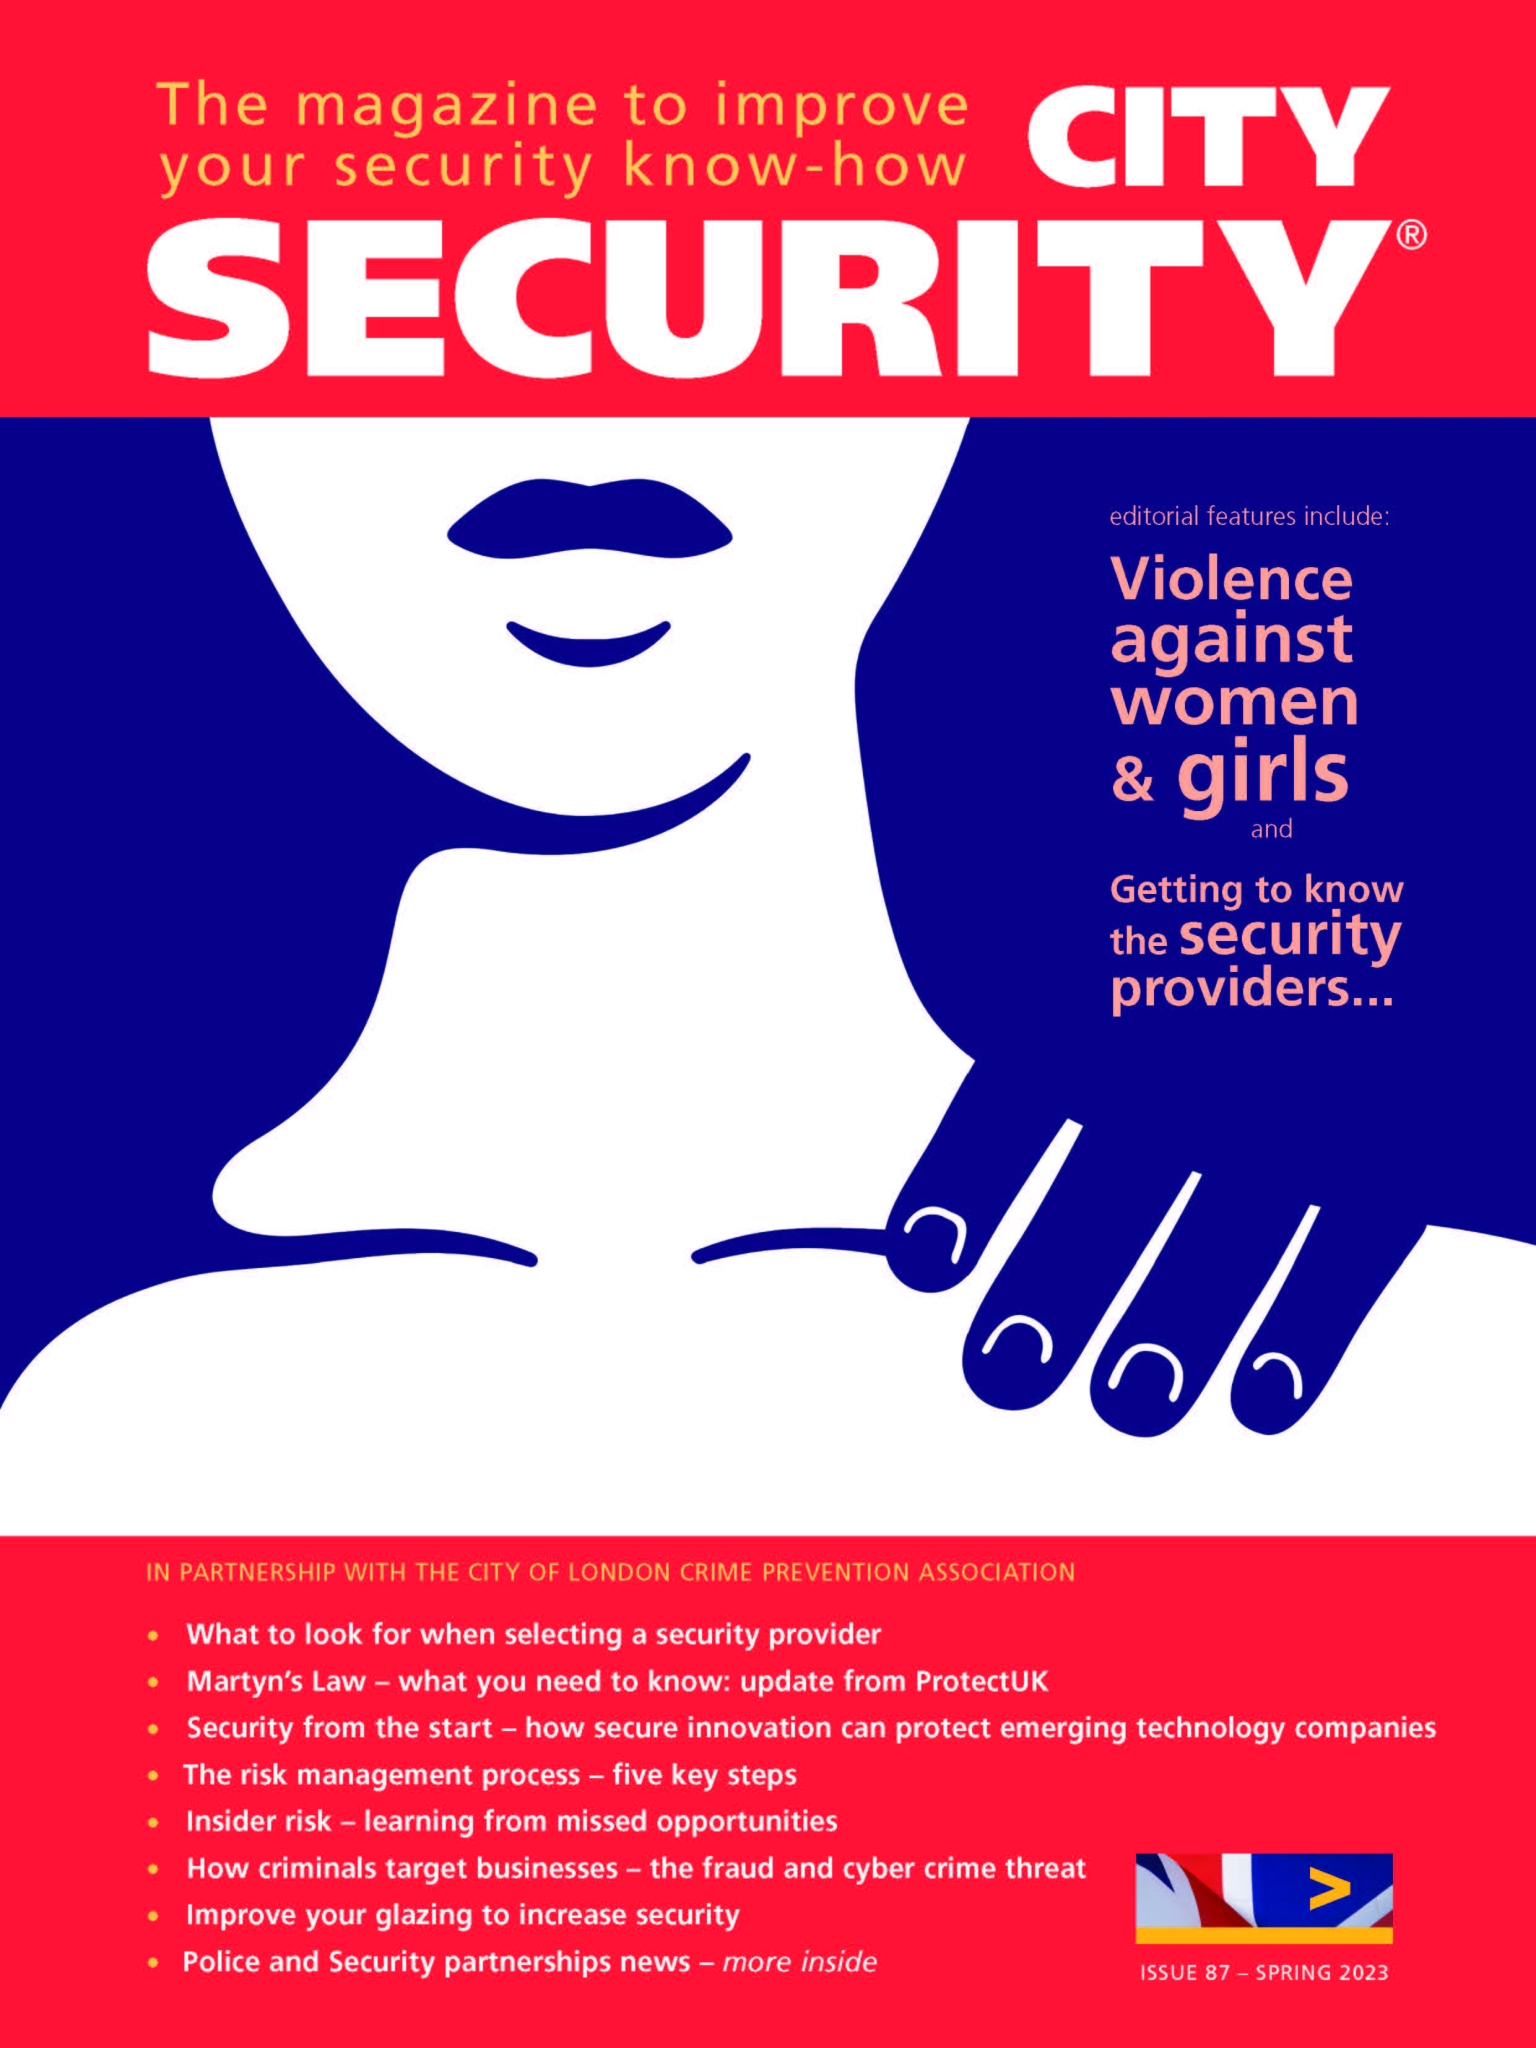 City security magazine spring cover